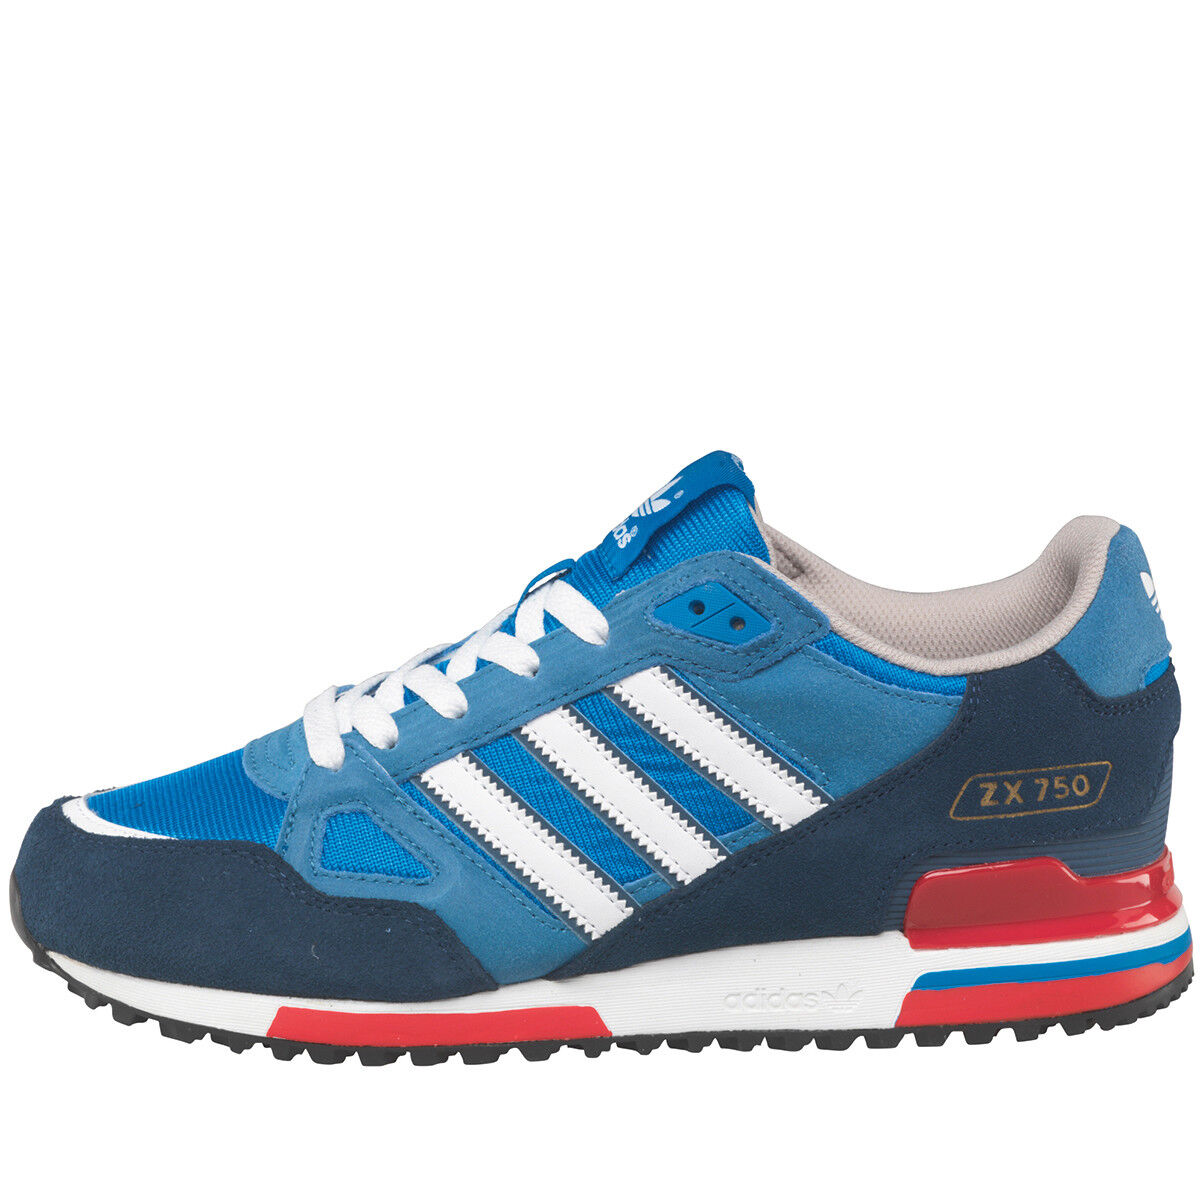 adidas Originals Mens ZX 750 Trainers Bluebird/Blue/Navy/Red/White 